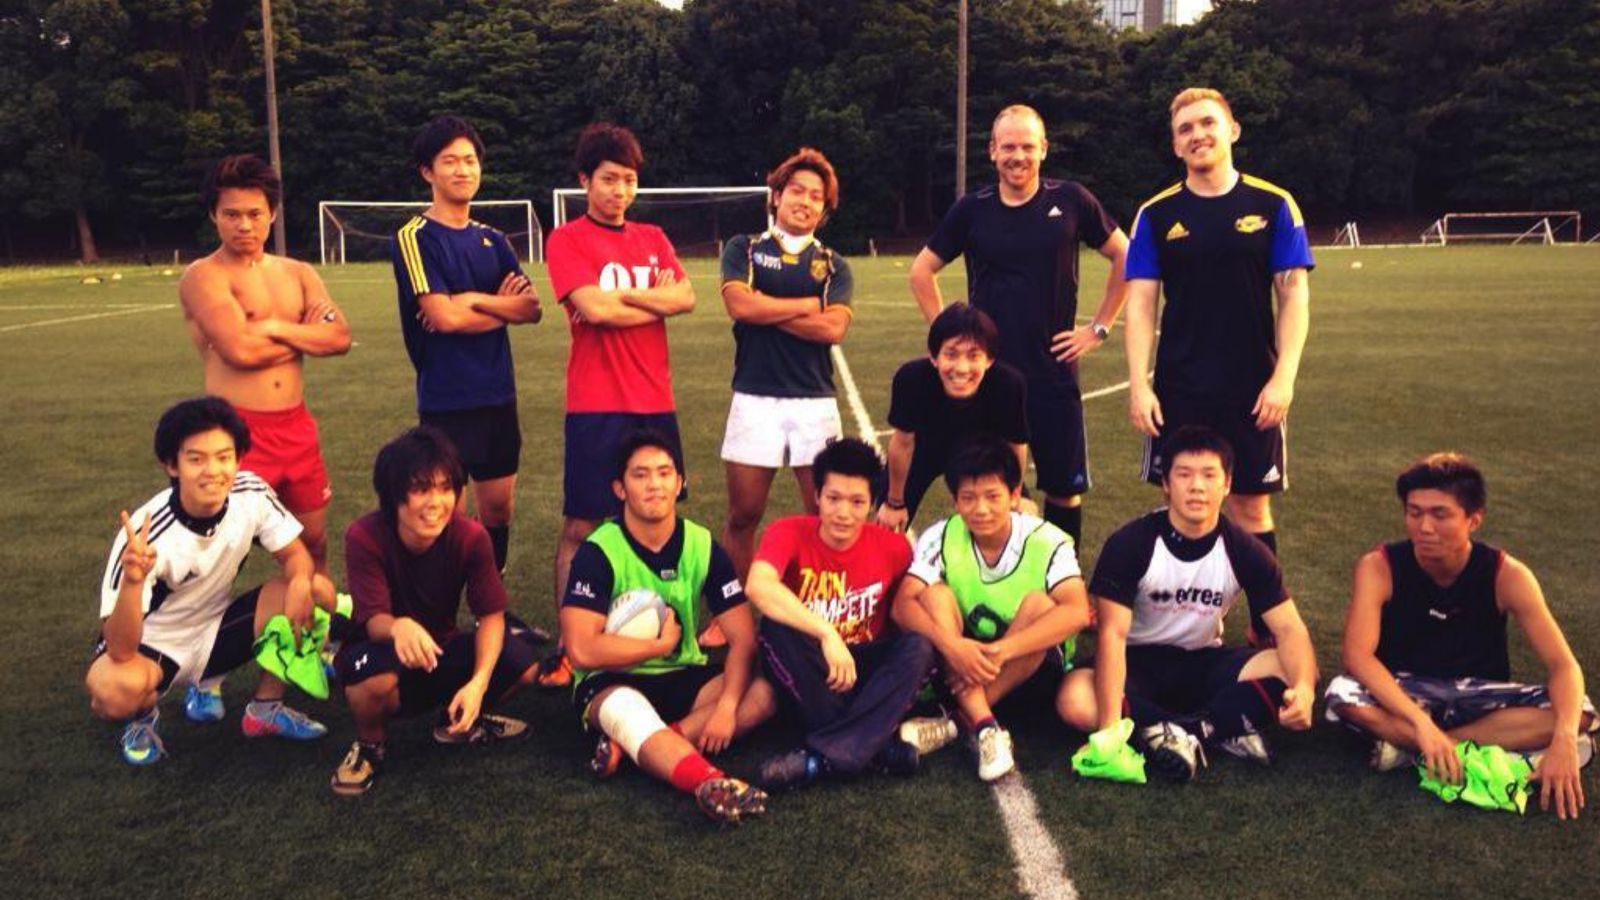 rugby team in Japan 12 japanese men, two white men